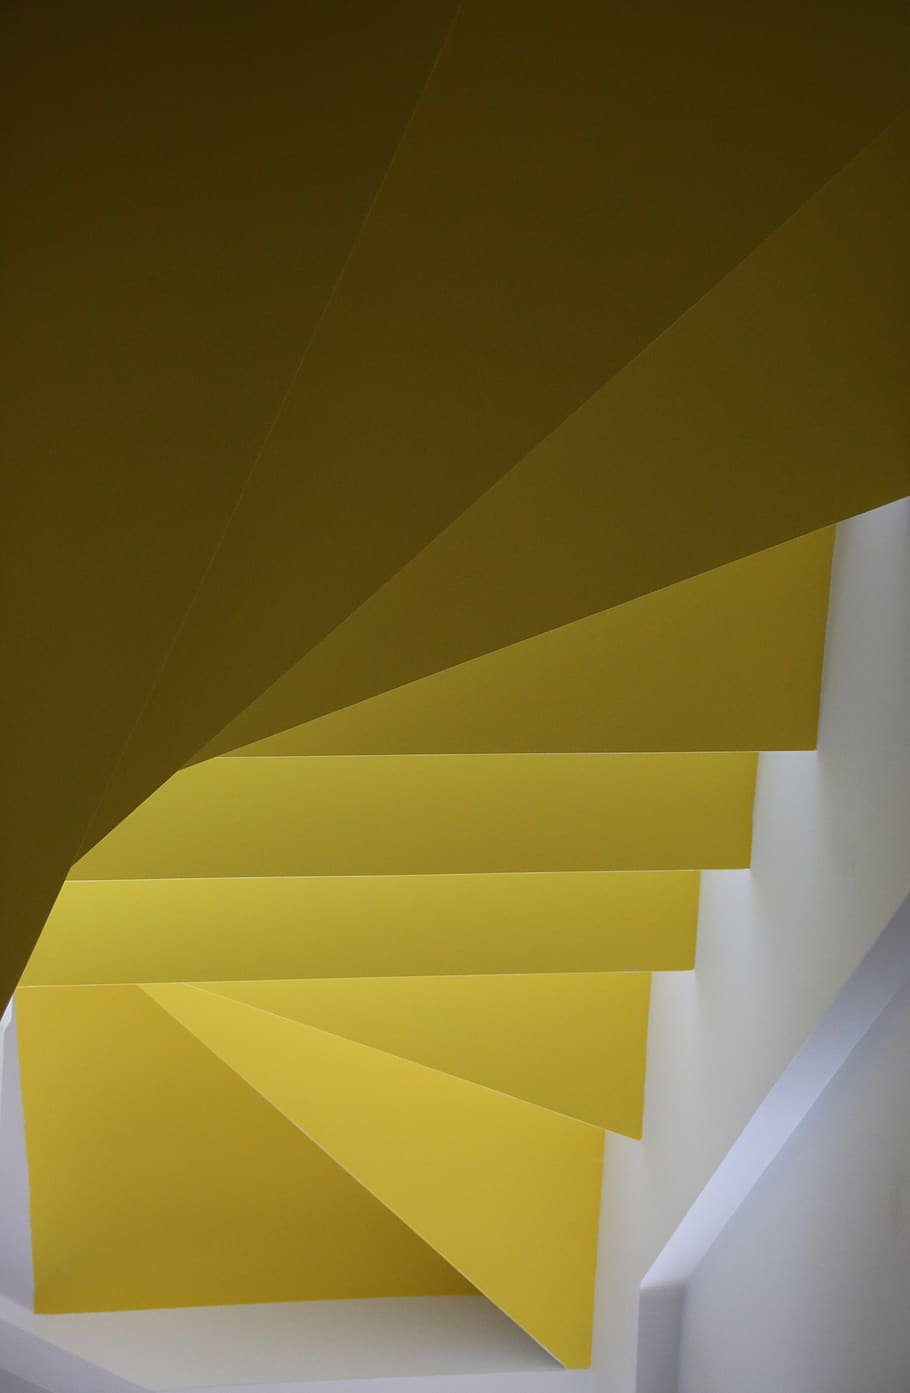 escalera, escaleras, pasos, amarillo, moderno, loft, arquitectura, interior, diseño, contemporáneo